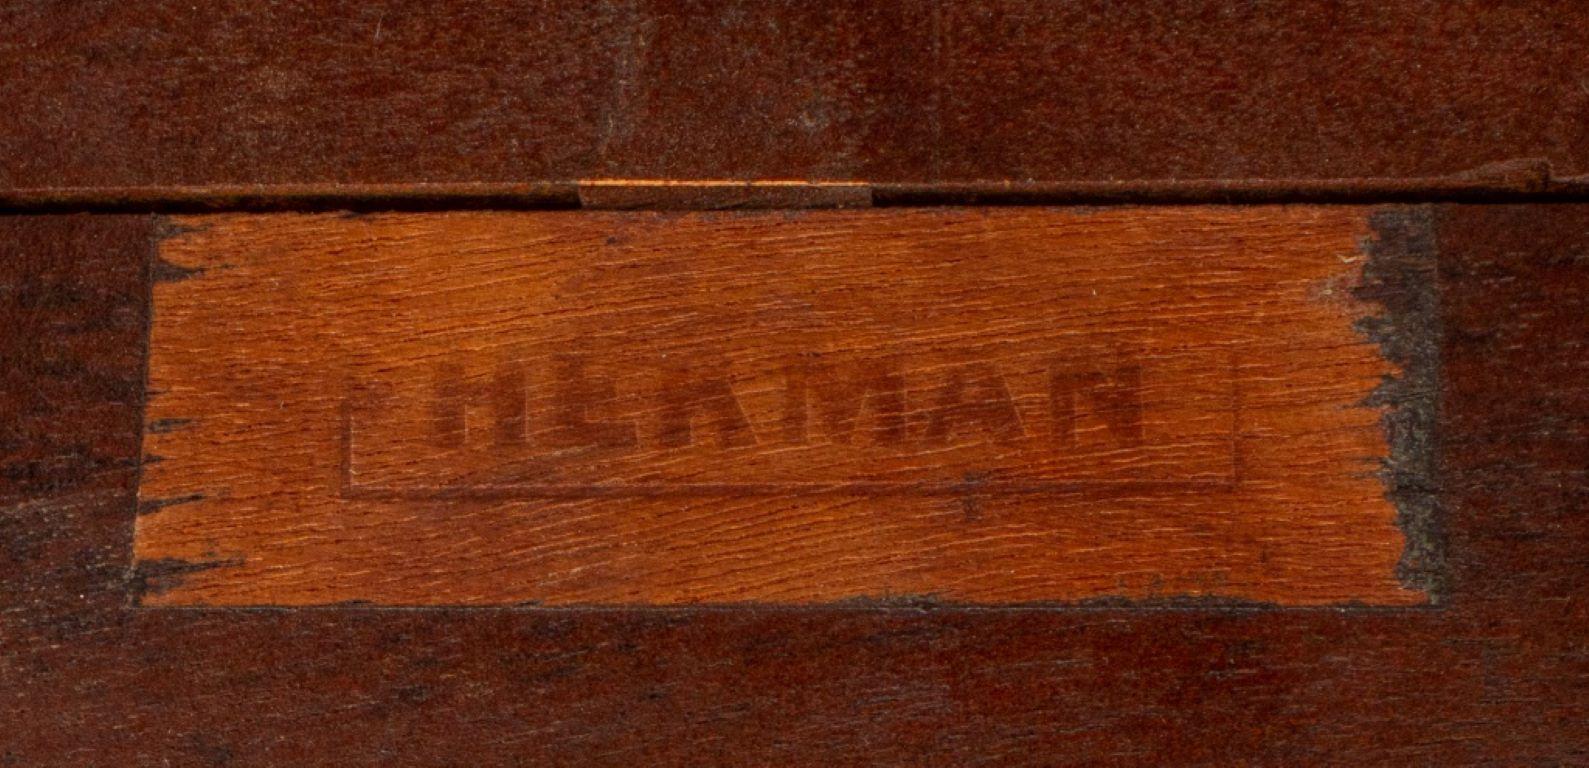 Hekman Ebonized Wood Leather Top Pedestal Table For Sale 2